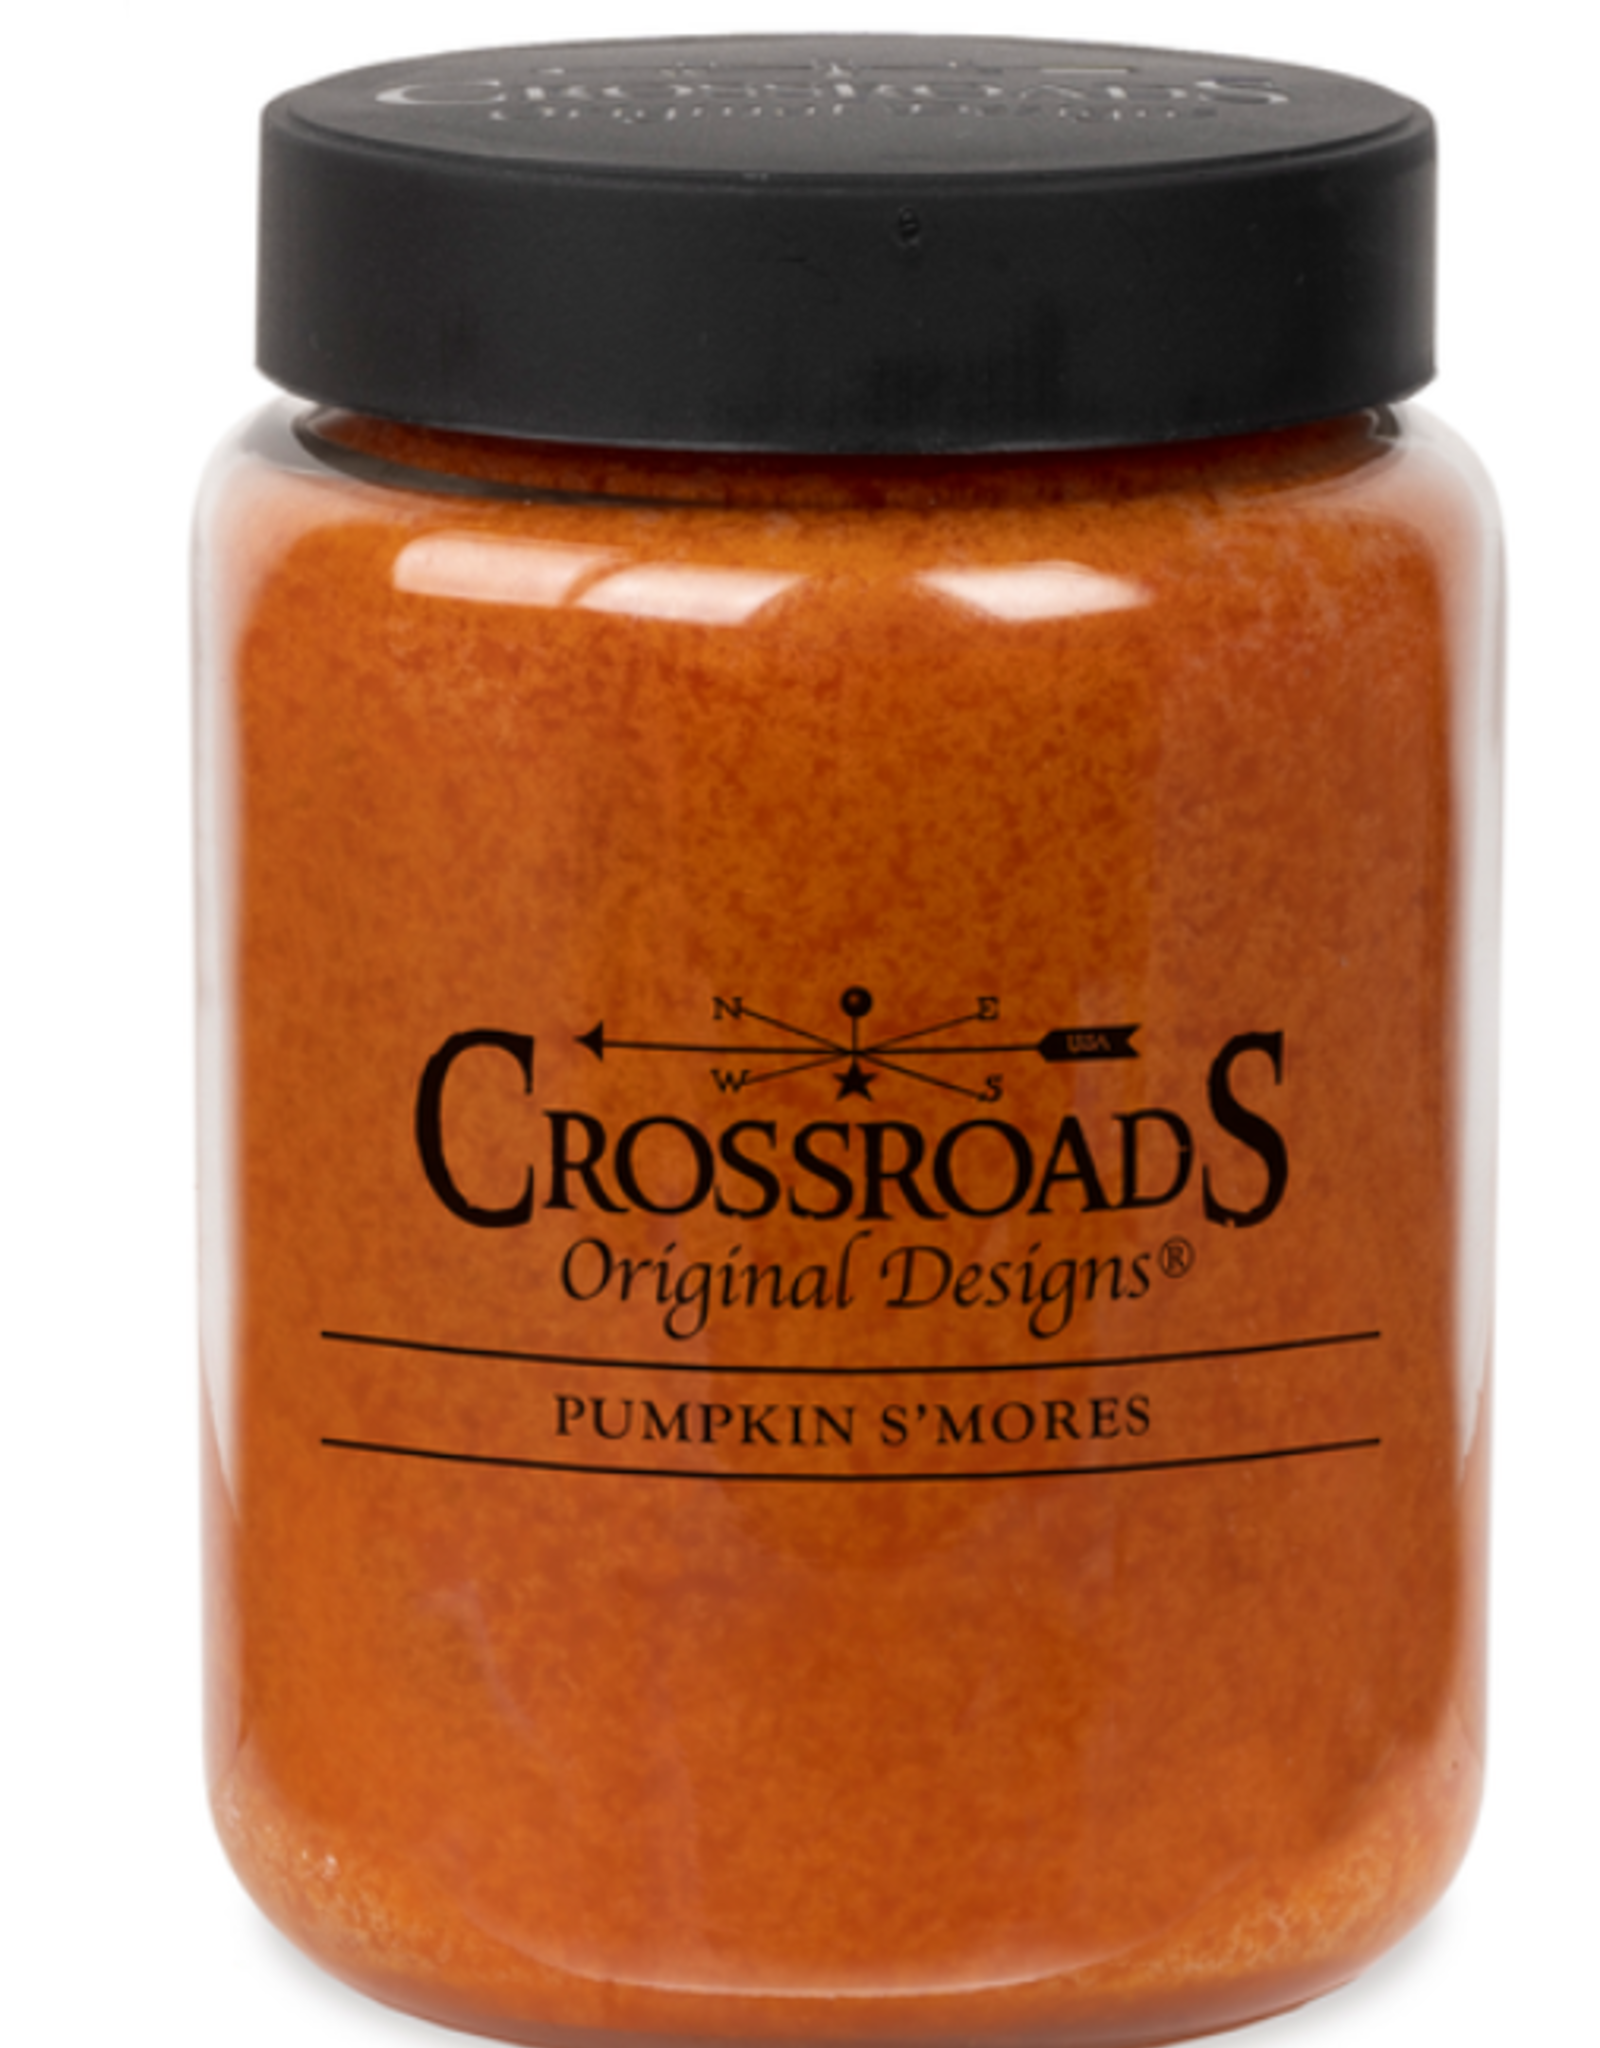 Crossroads Pumpkin S'mores  Candle 26 oz